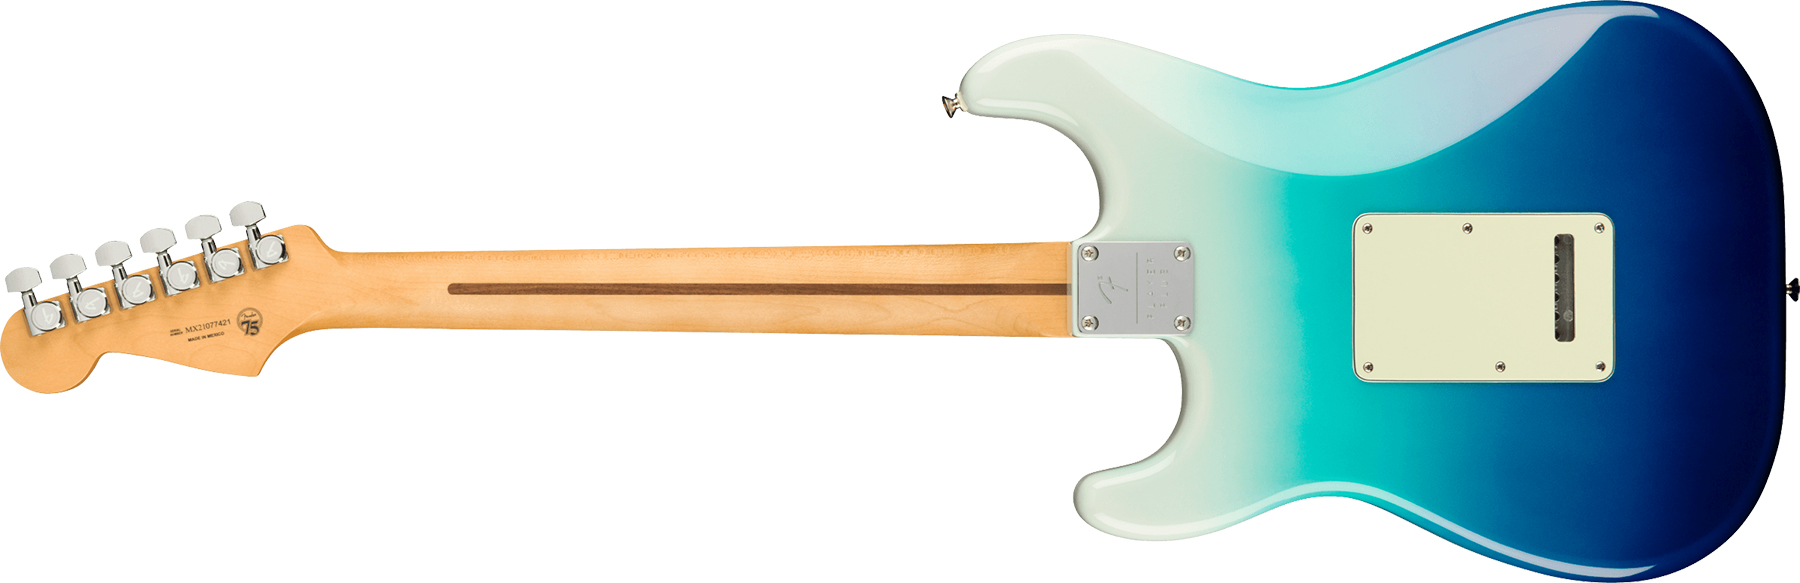 Fender Strat Player Plus Mex Hss Trem Pf - Belair Blue - Str shape electric guitar - Variation 1